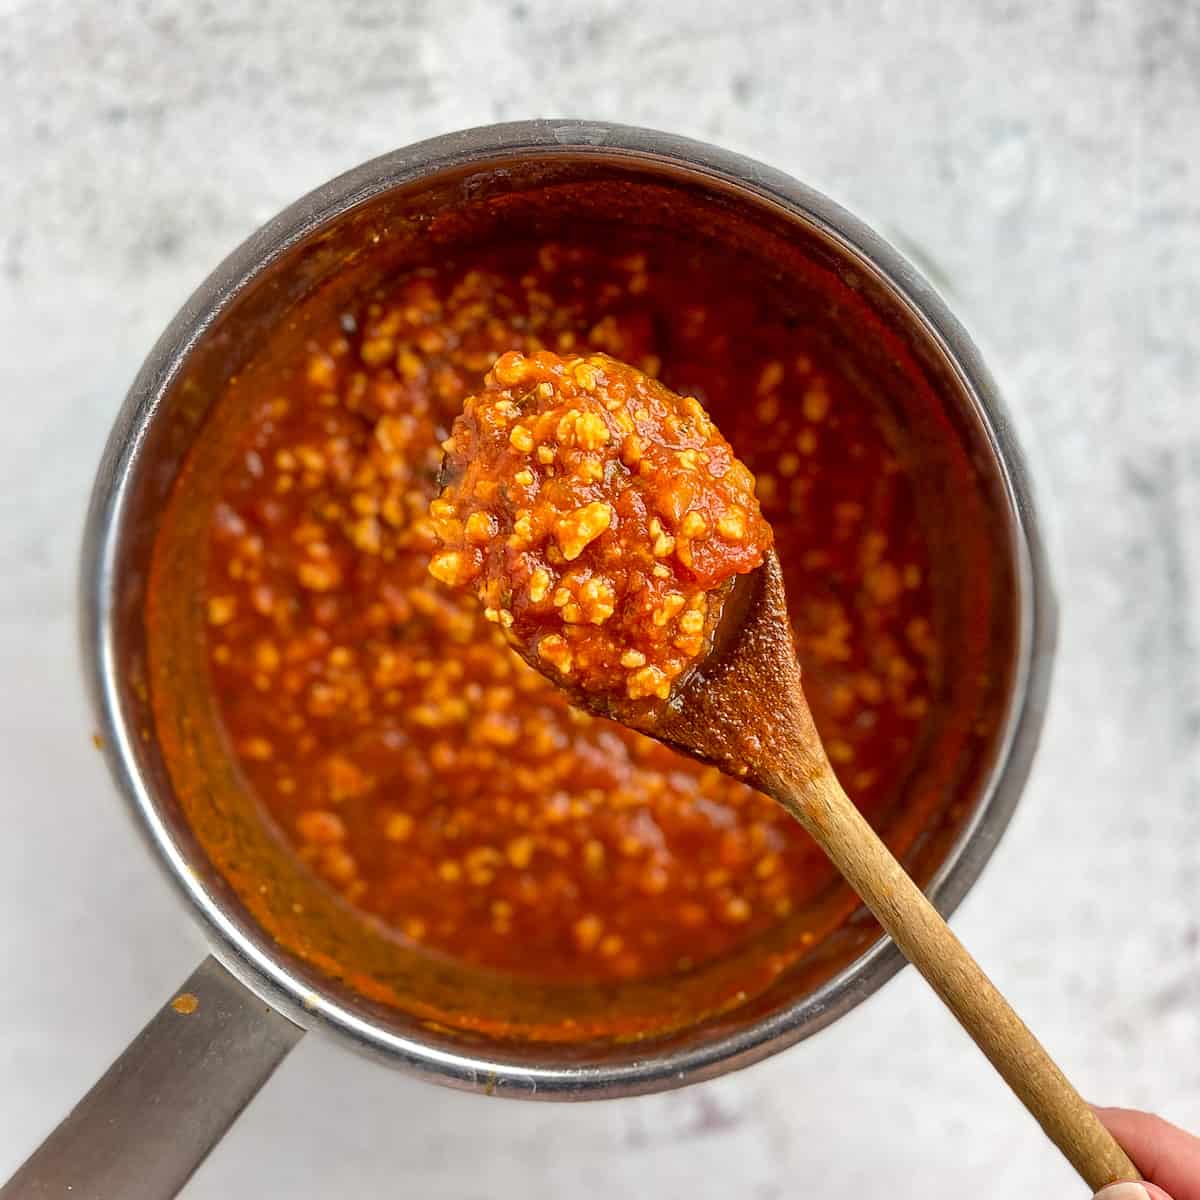 Spoon lifting up vegan spaghetti sauce over a pot.